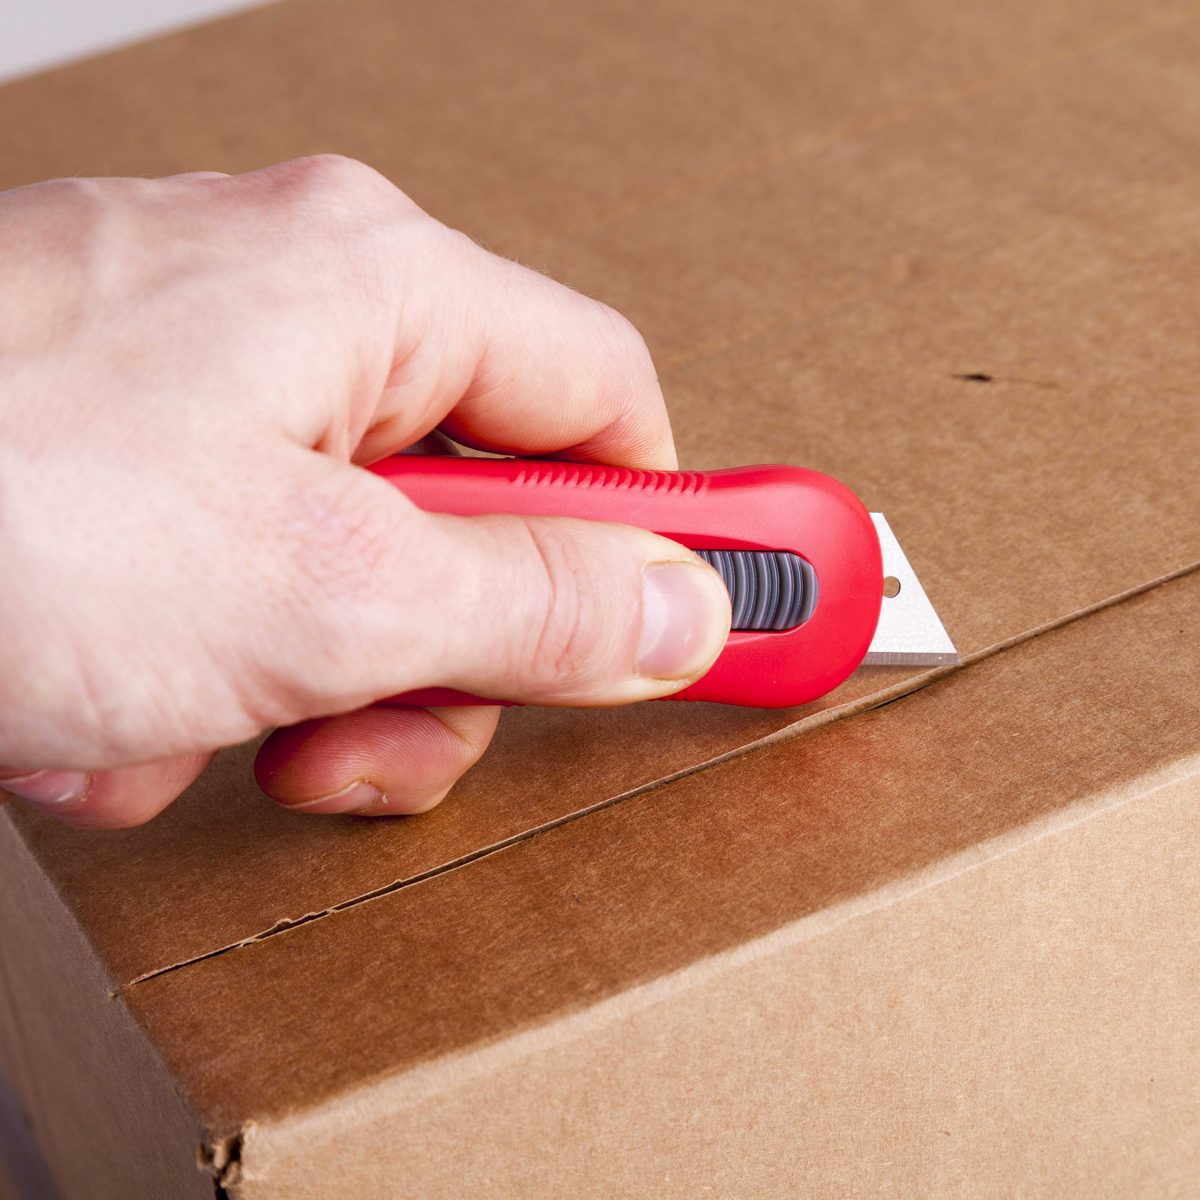 Ergonomic Safety Knife For Cardboard